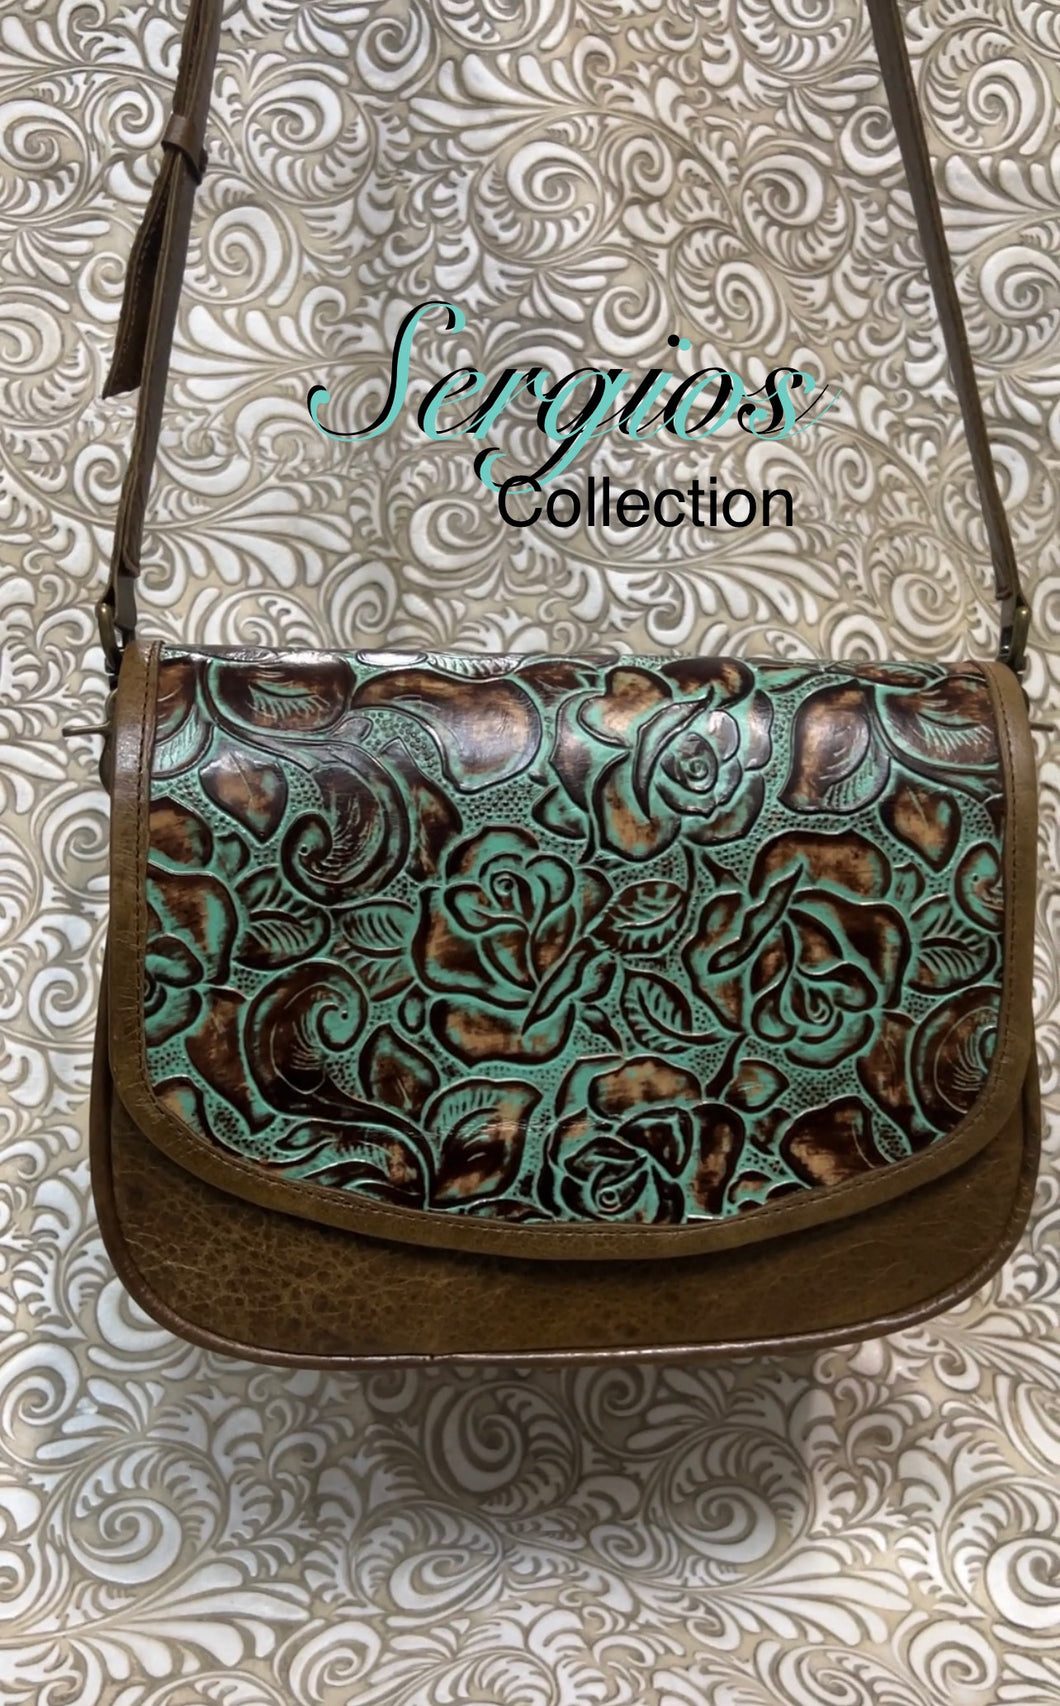 Santa Barbara Saddle bag style WITH FLORAL TURQUOISE